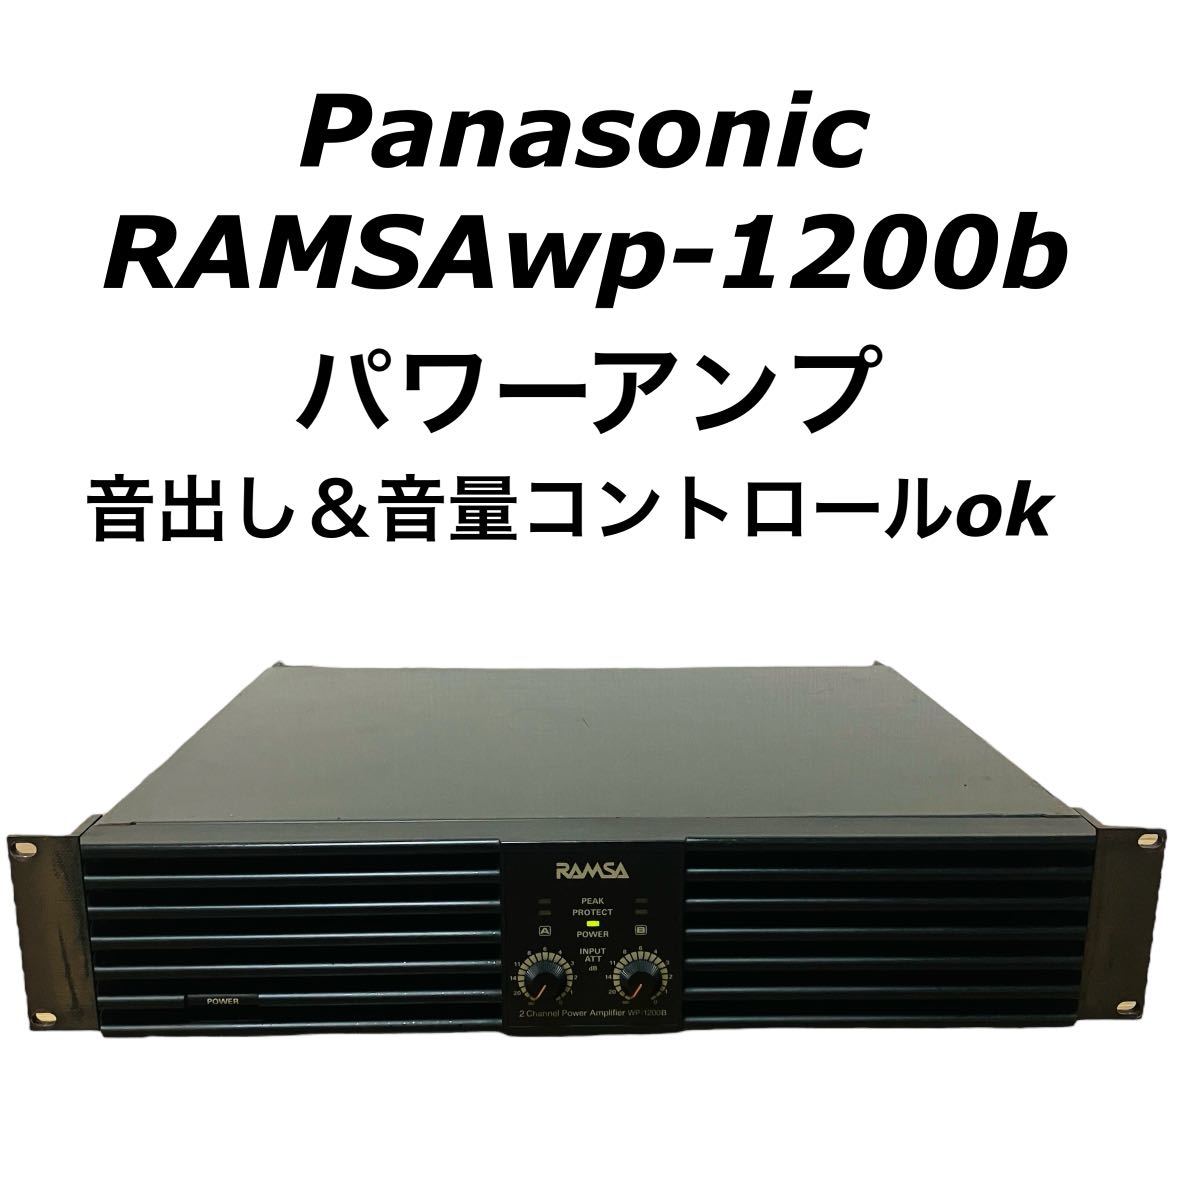 Panasonic パワーアンプ ramsa ラムサ wp-1200b アンプ パナソニック 日本製 オーディオ 放送機器 出力200w+200w 業務用 松下電器産業_画像1